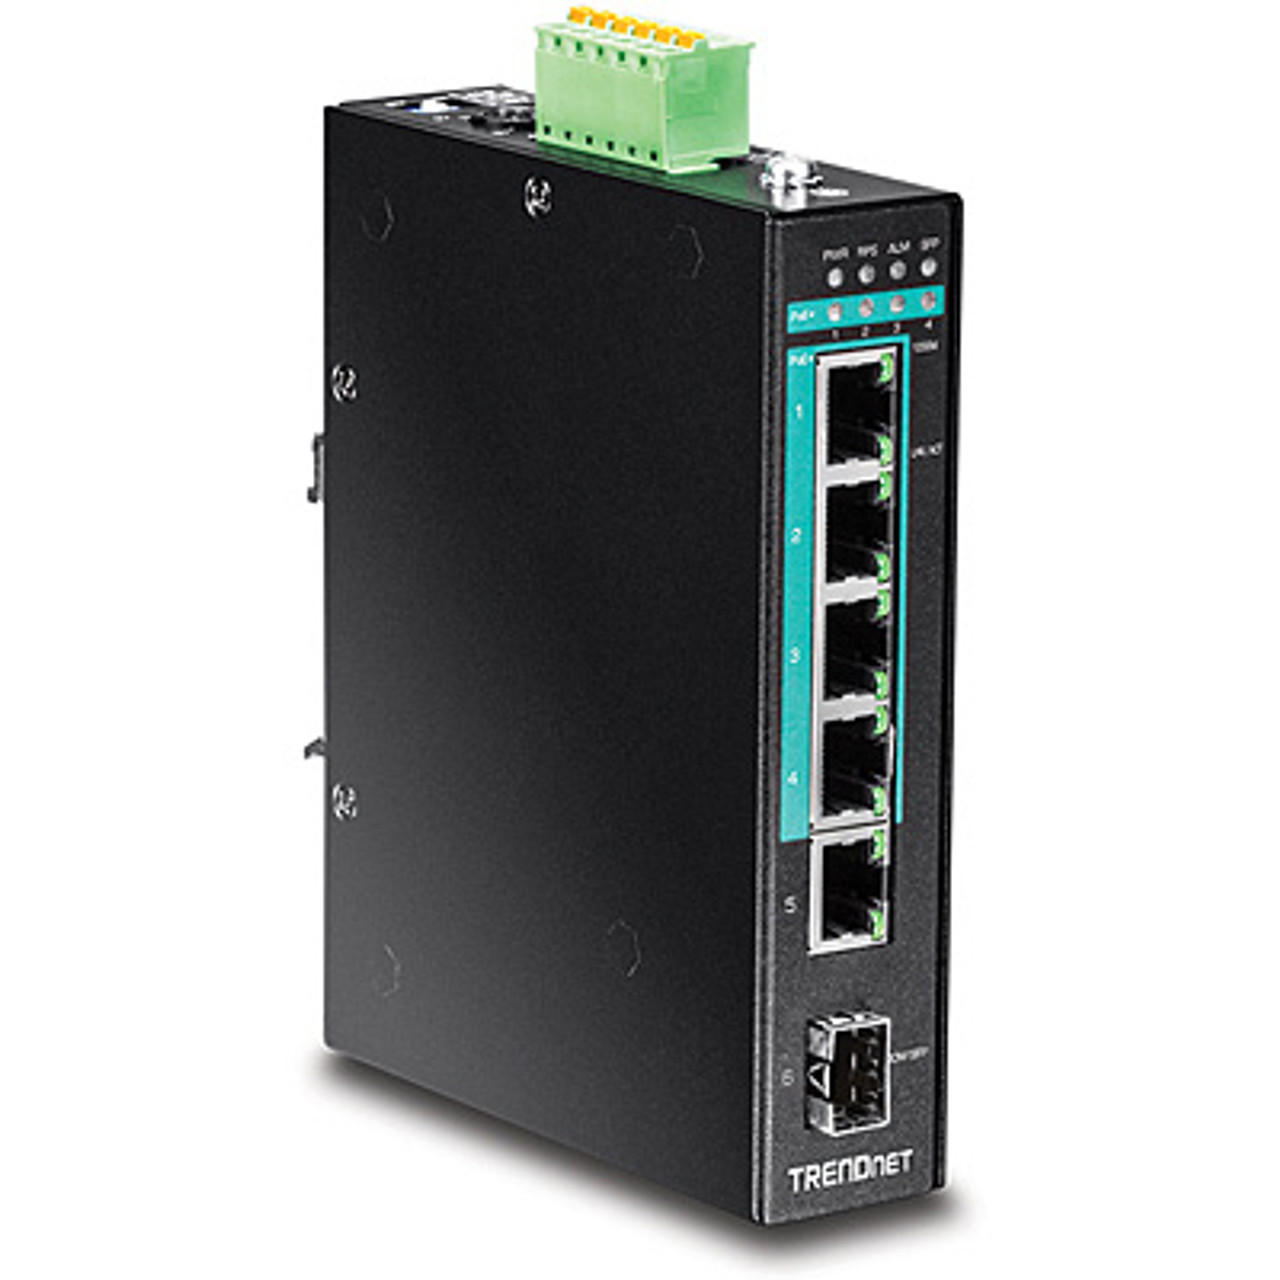 Trendnet TI-PG541 Unmanaged network switch L2 Gigabit Ethernet (10/100/1000) Power over Ethernet (PoE